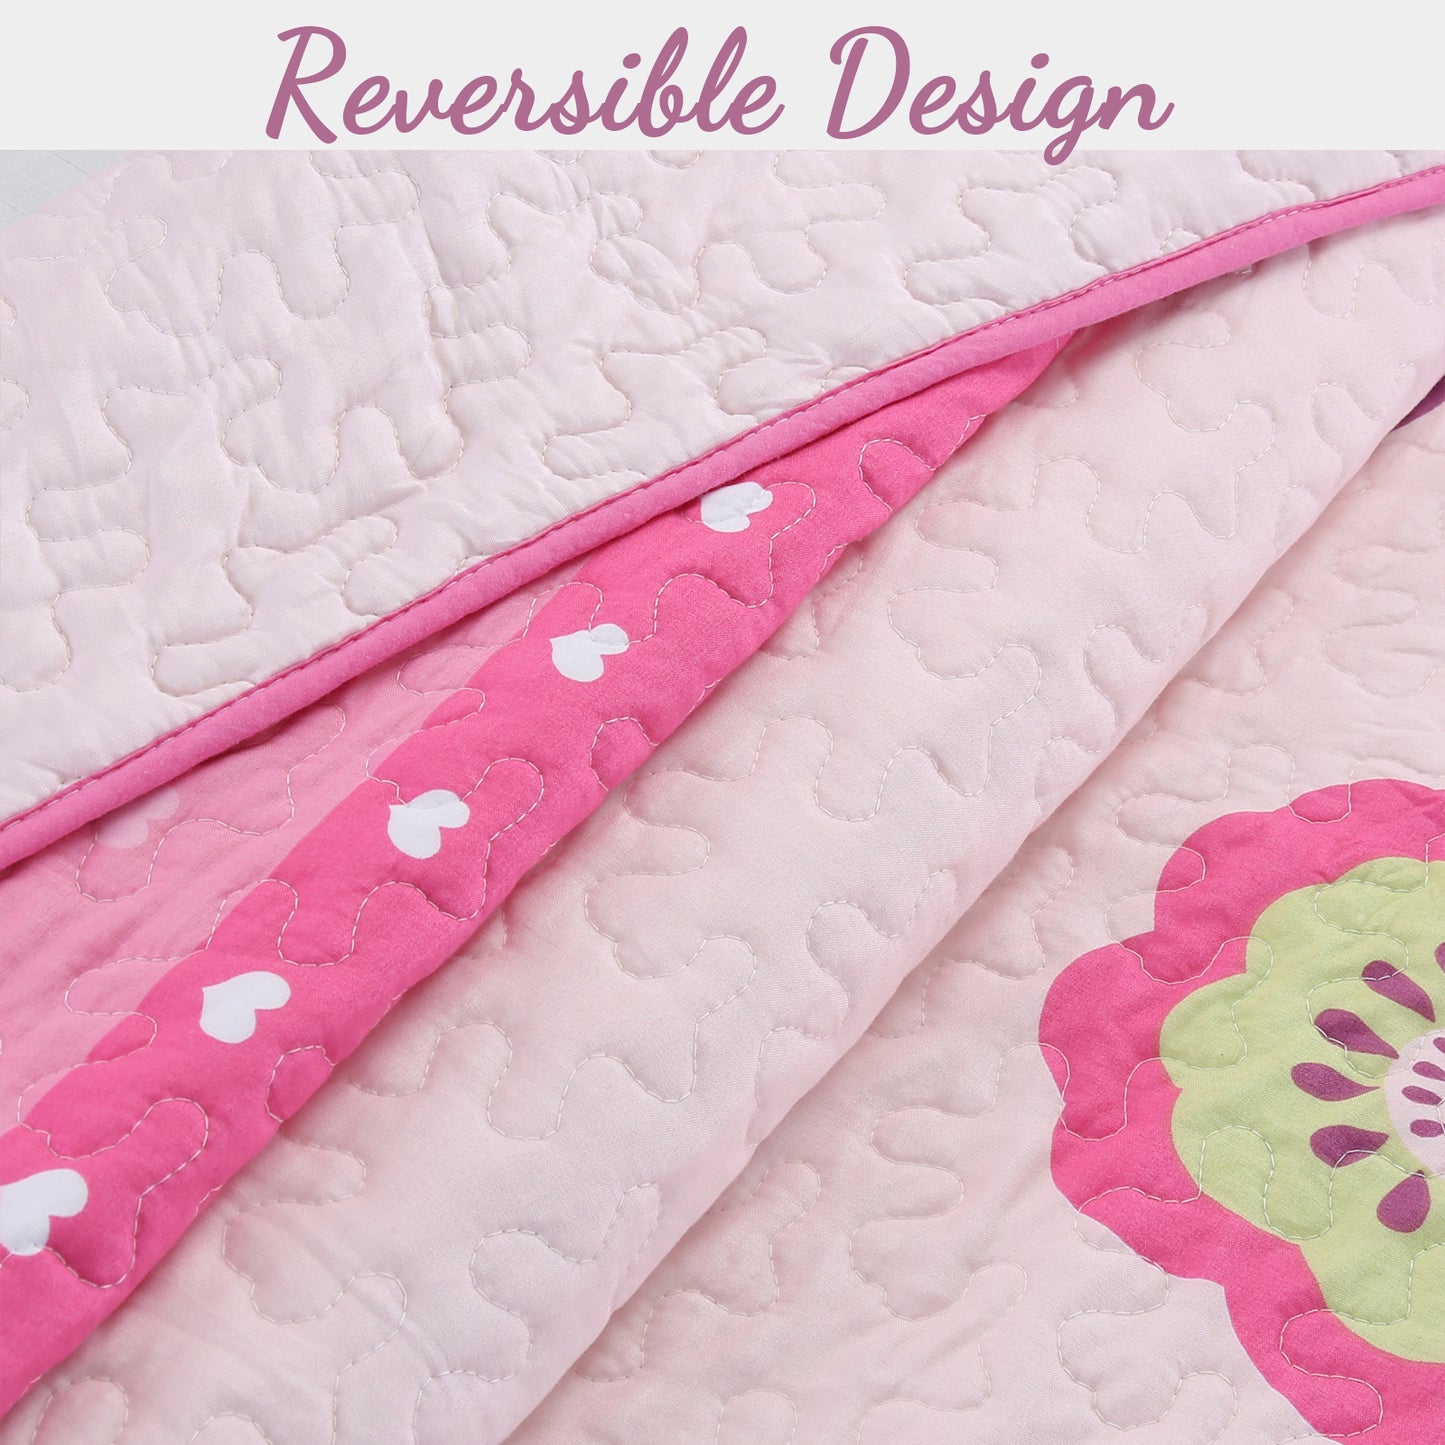 Pink Flower Garden Girl Print Reversible Quilt Bedding Set